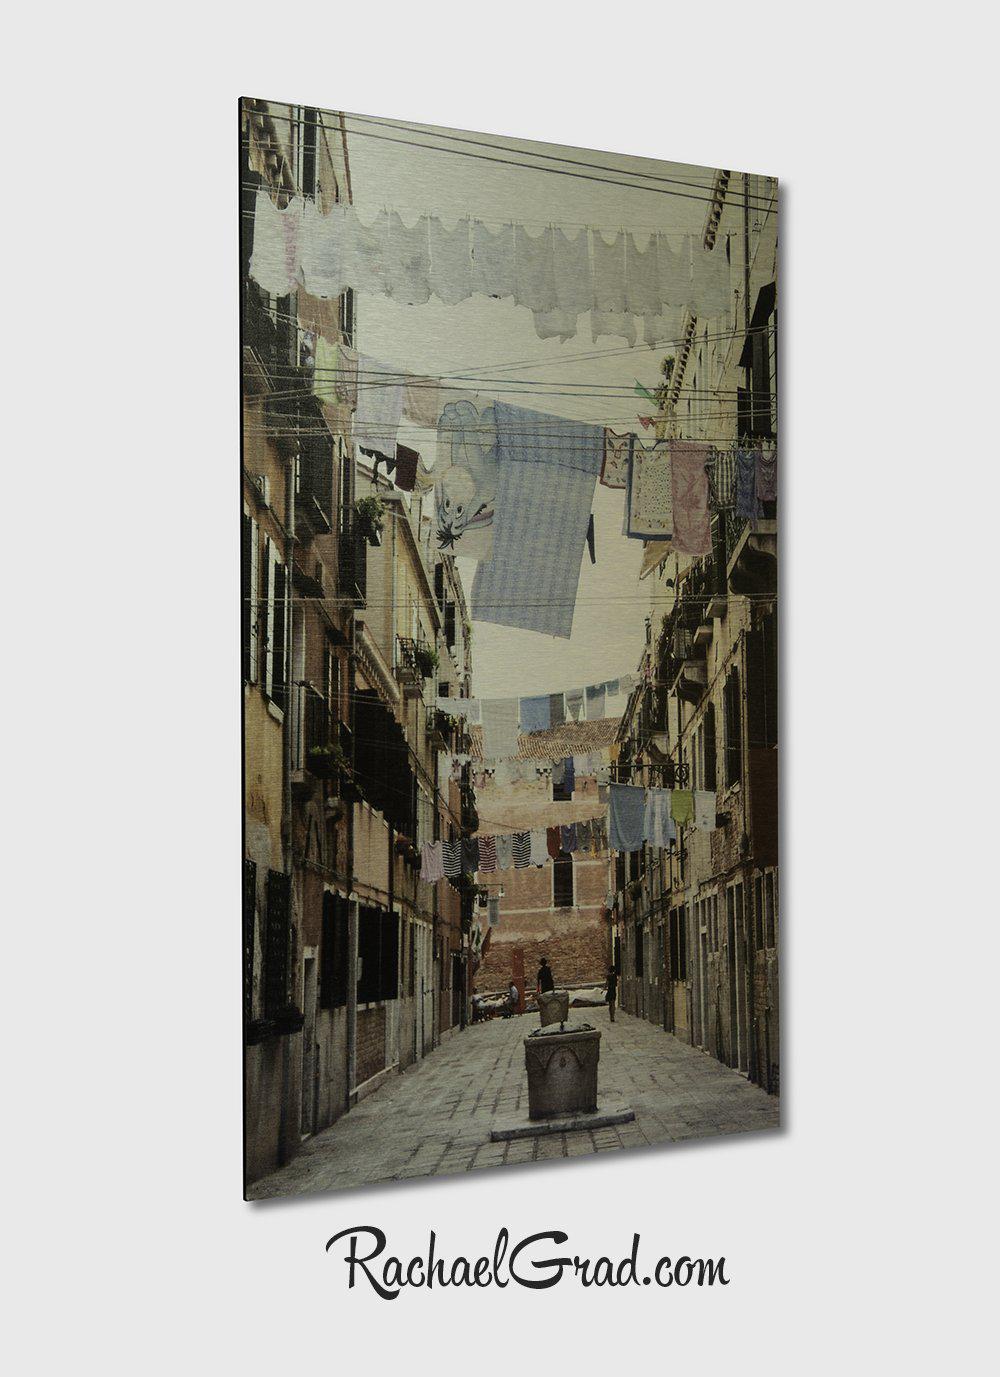 Laundry Lines Arsenale Venice Italy Art Print on Metal by Artist Rachael Grad Artwork